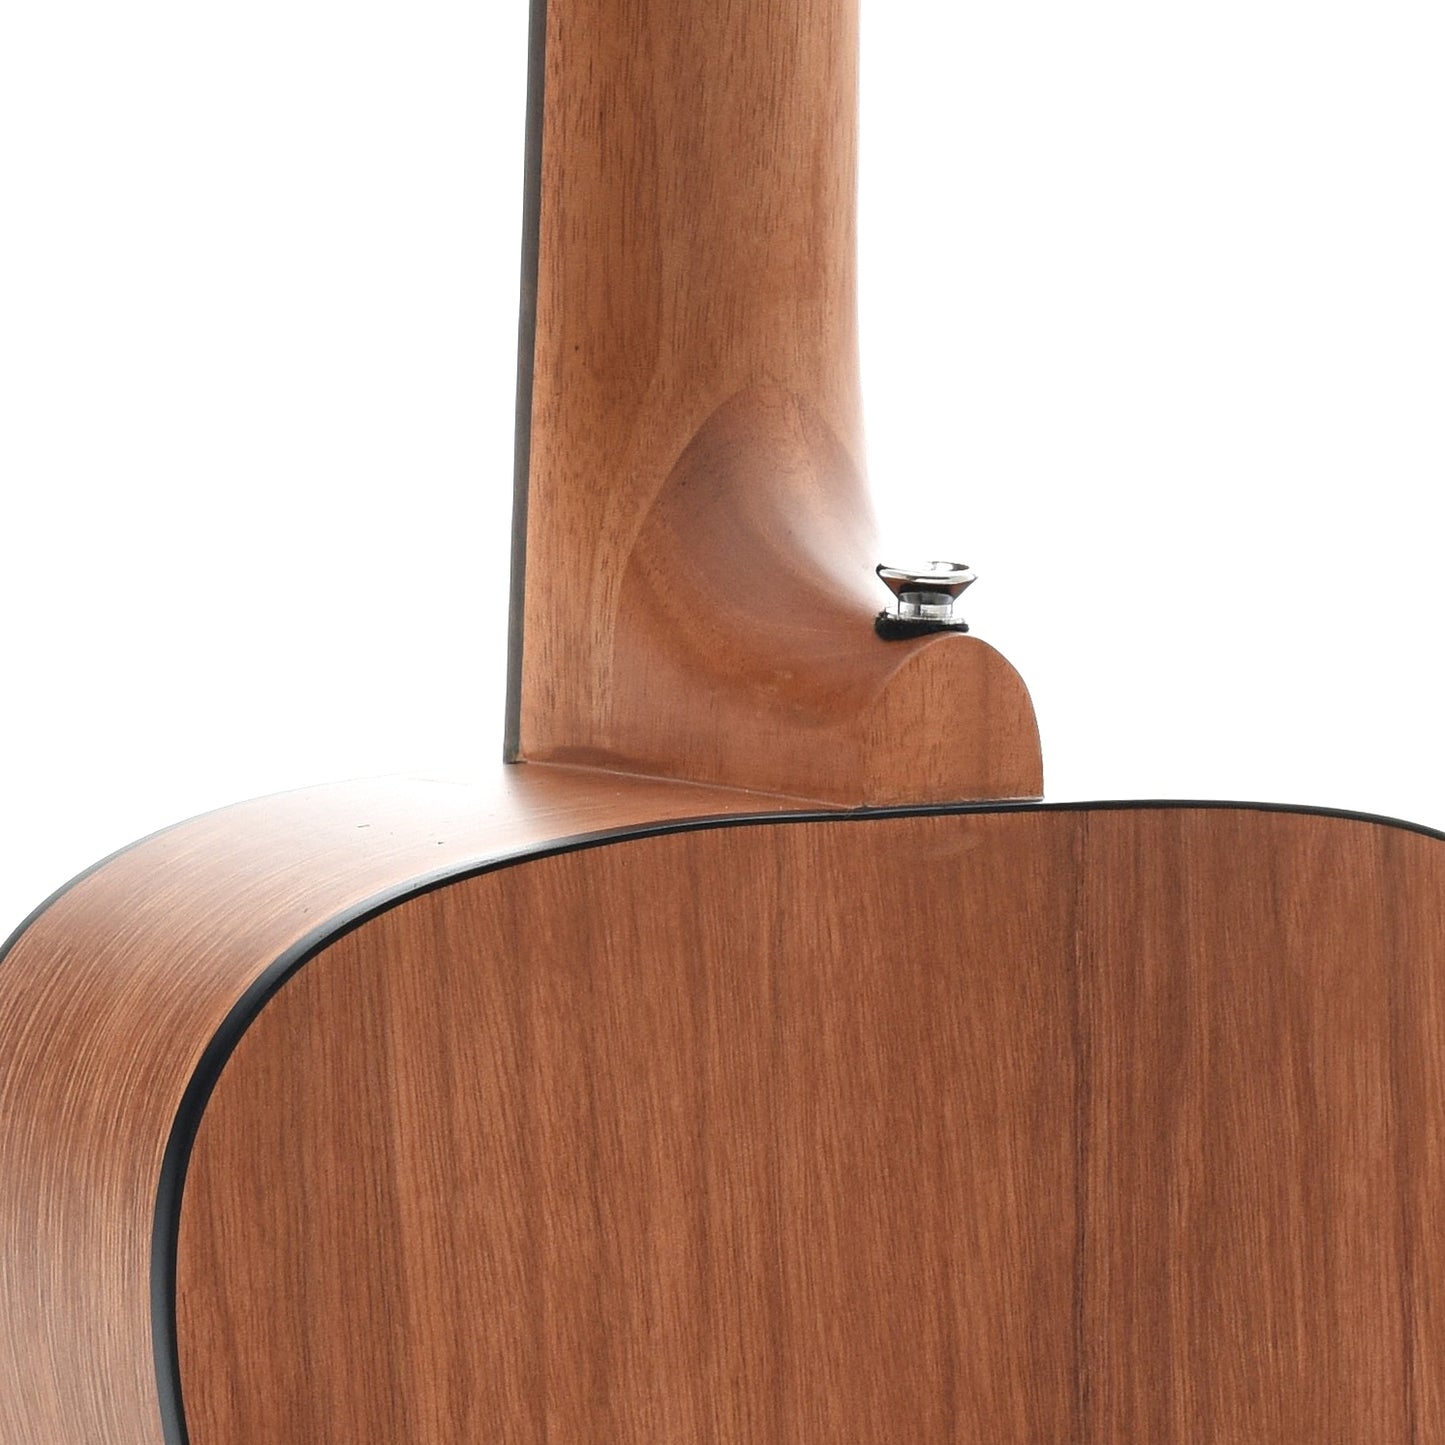 Heel of Yamaha JR1 3/4 Size Acoustic Guitar